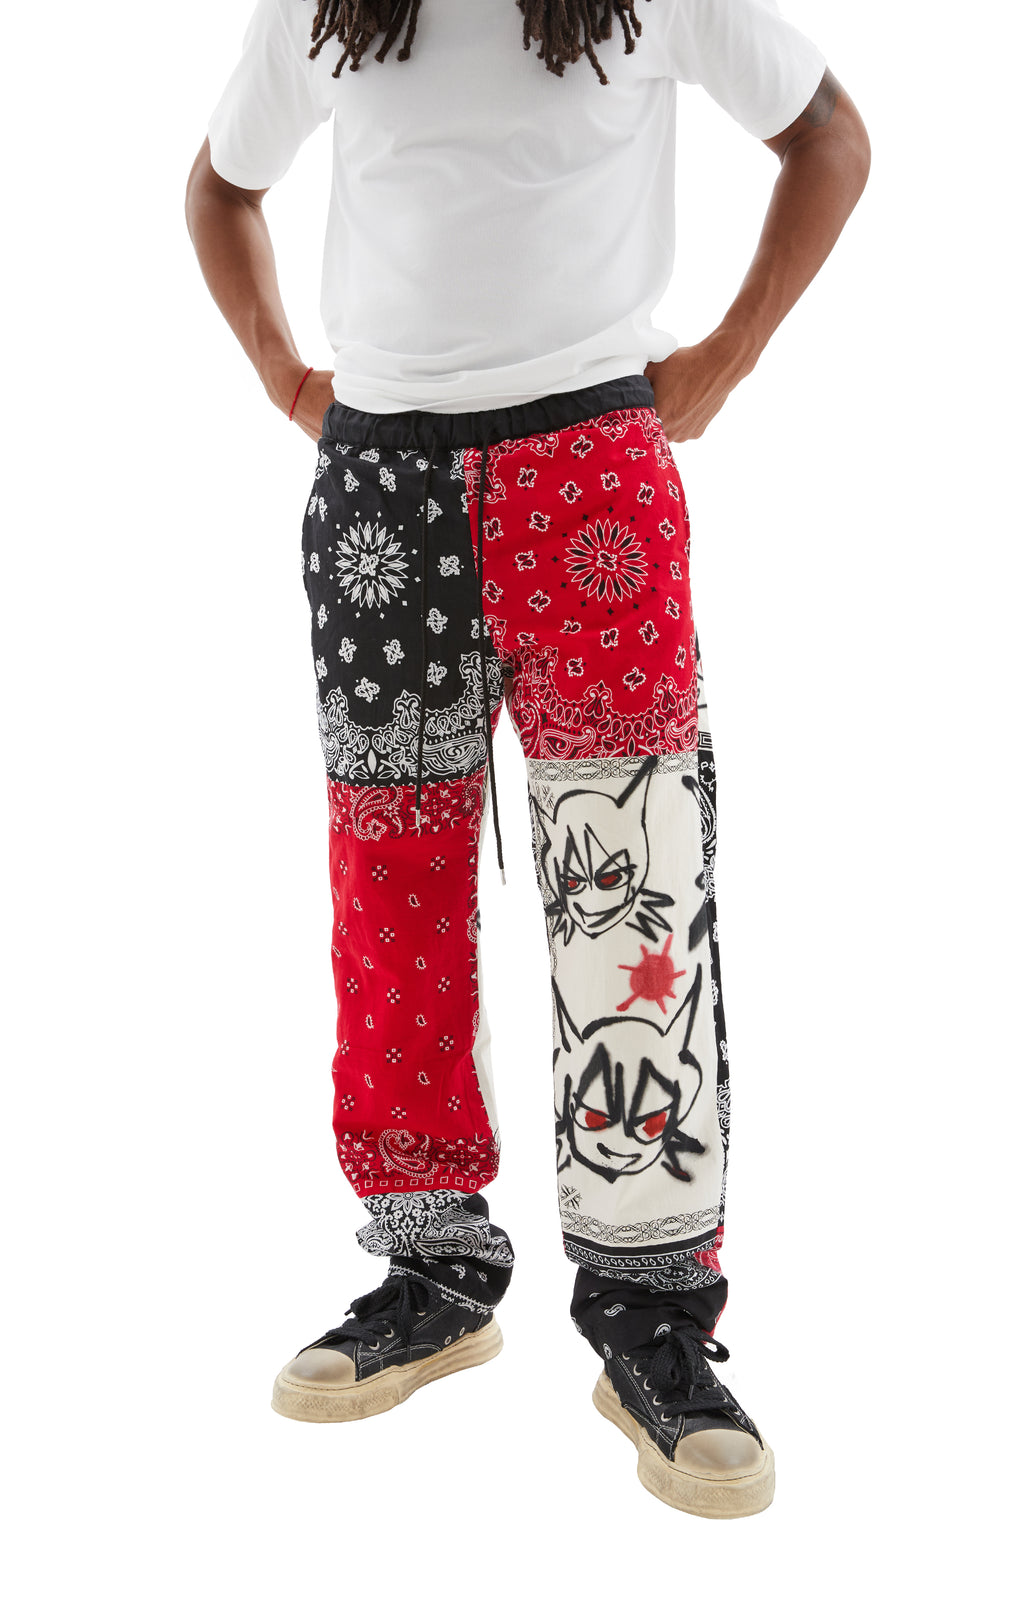 CUSTOM BANDANA PATCH PANTS!! - these custom pants... - Depop